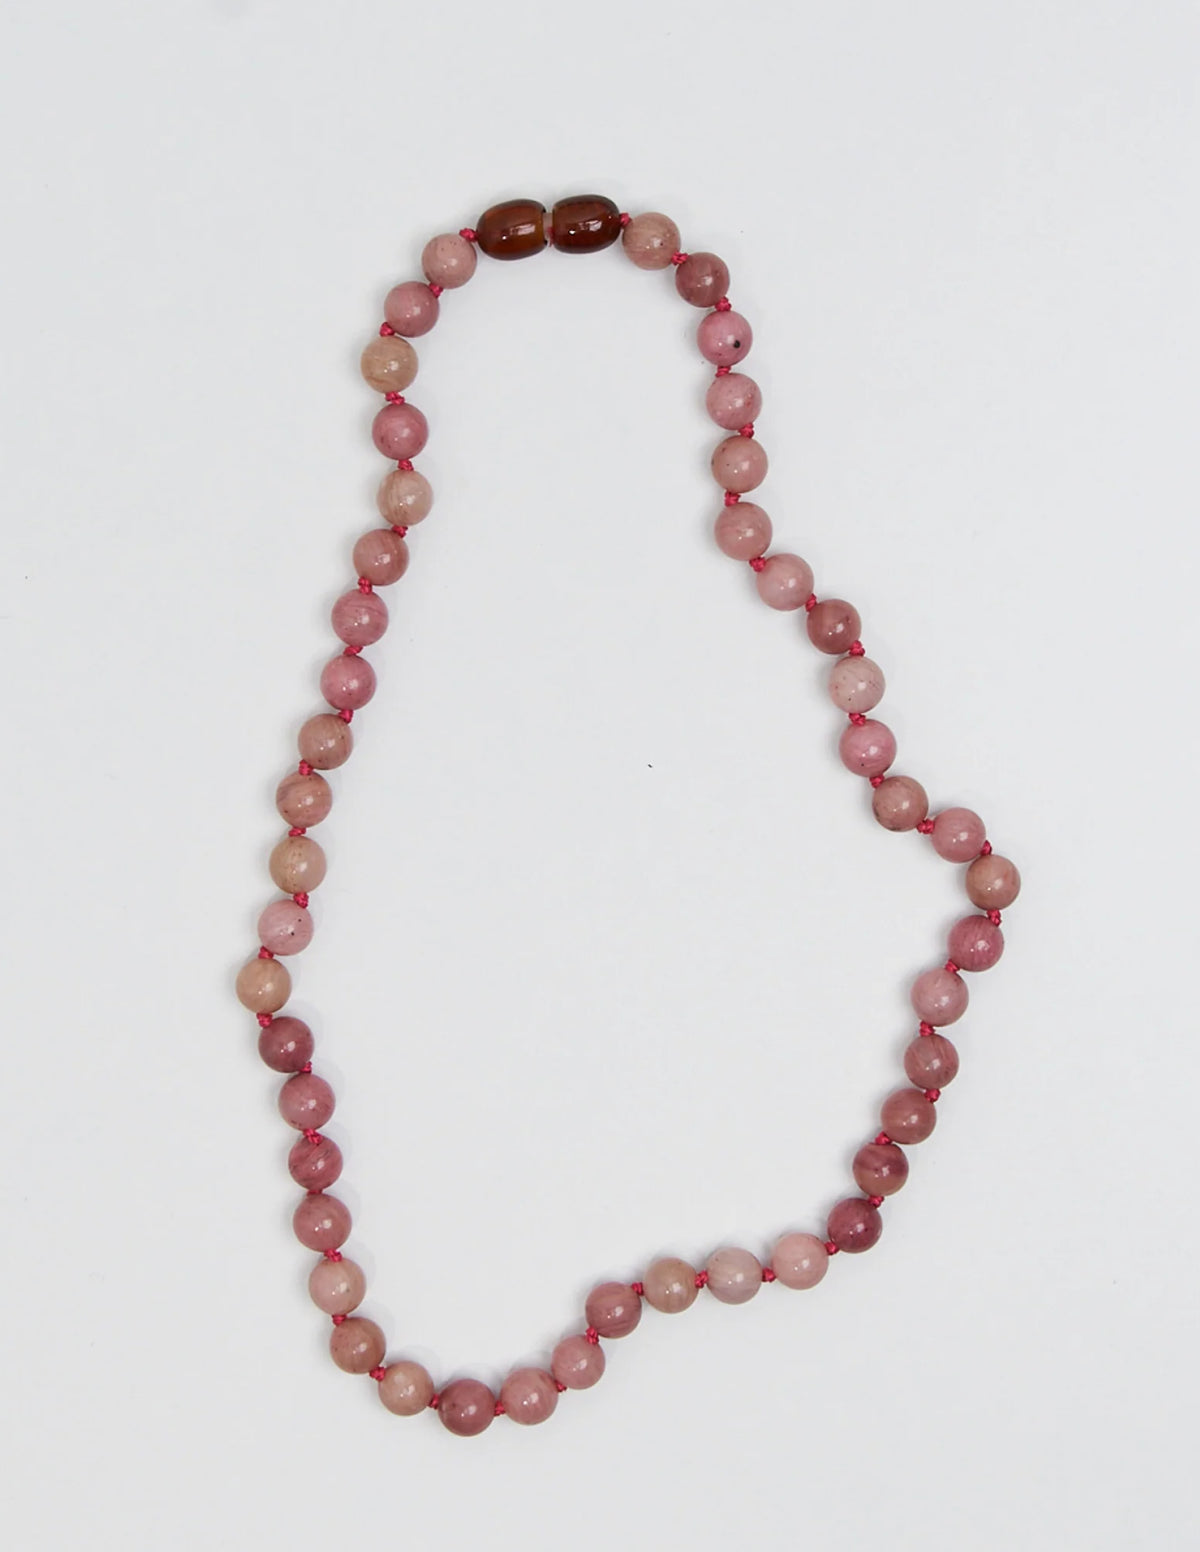 nirrimis - berry necklace